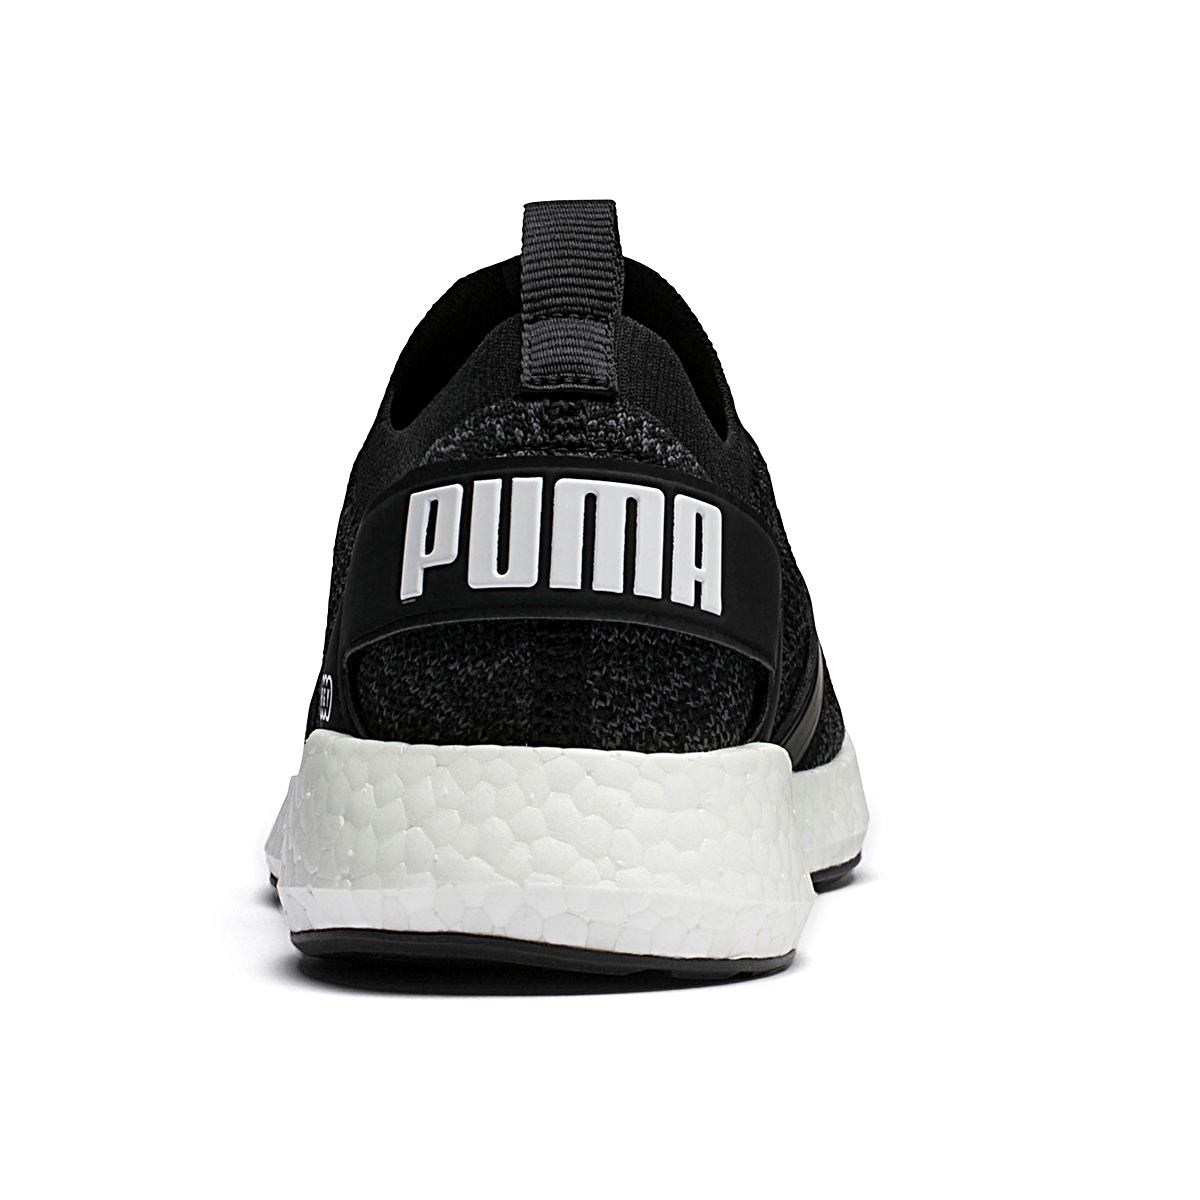 Puma Nrgy Neko Engineer Knit Wns Damen Sneaker Fitness schwarz 191094 08